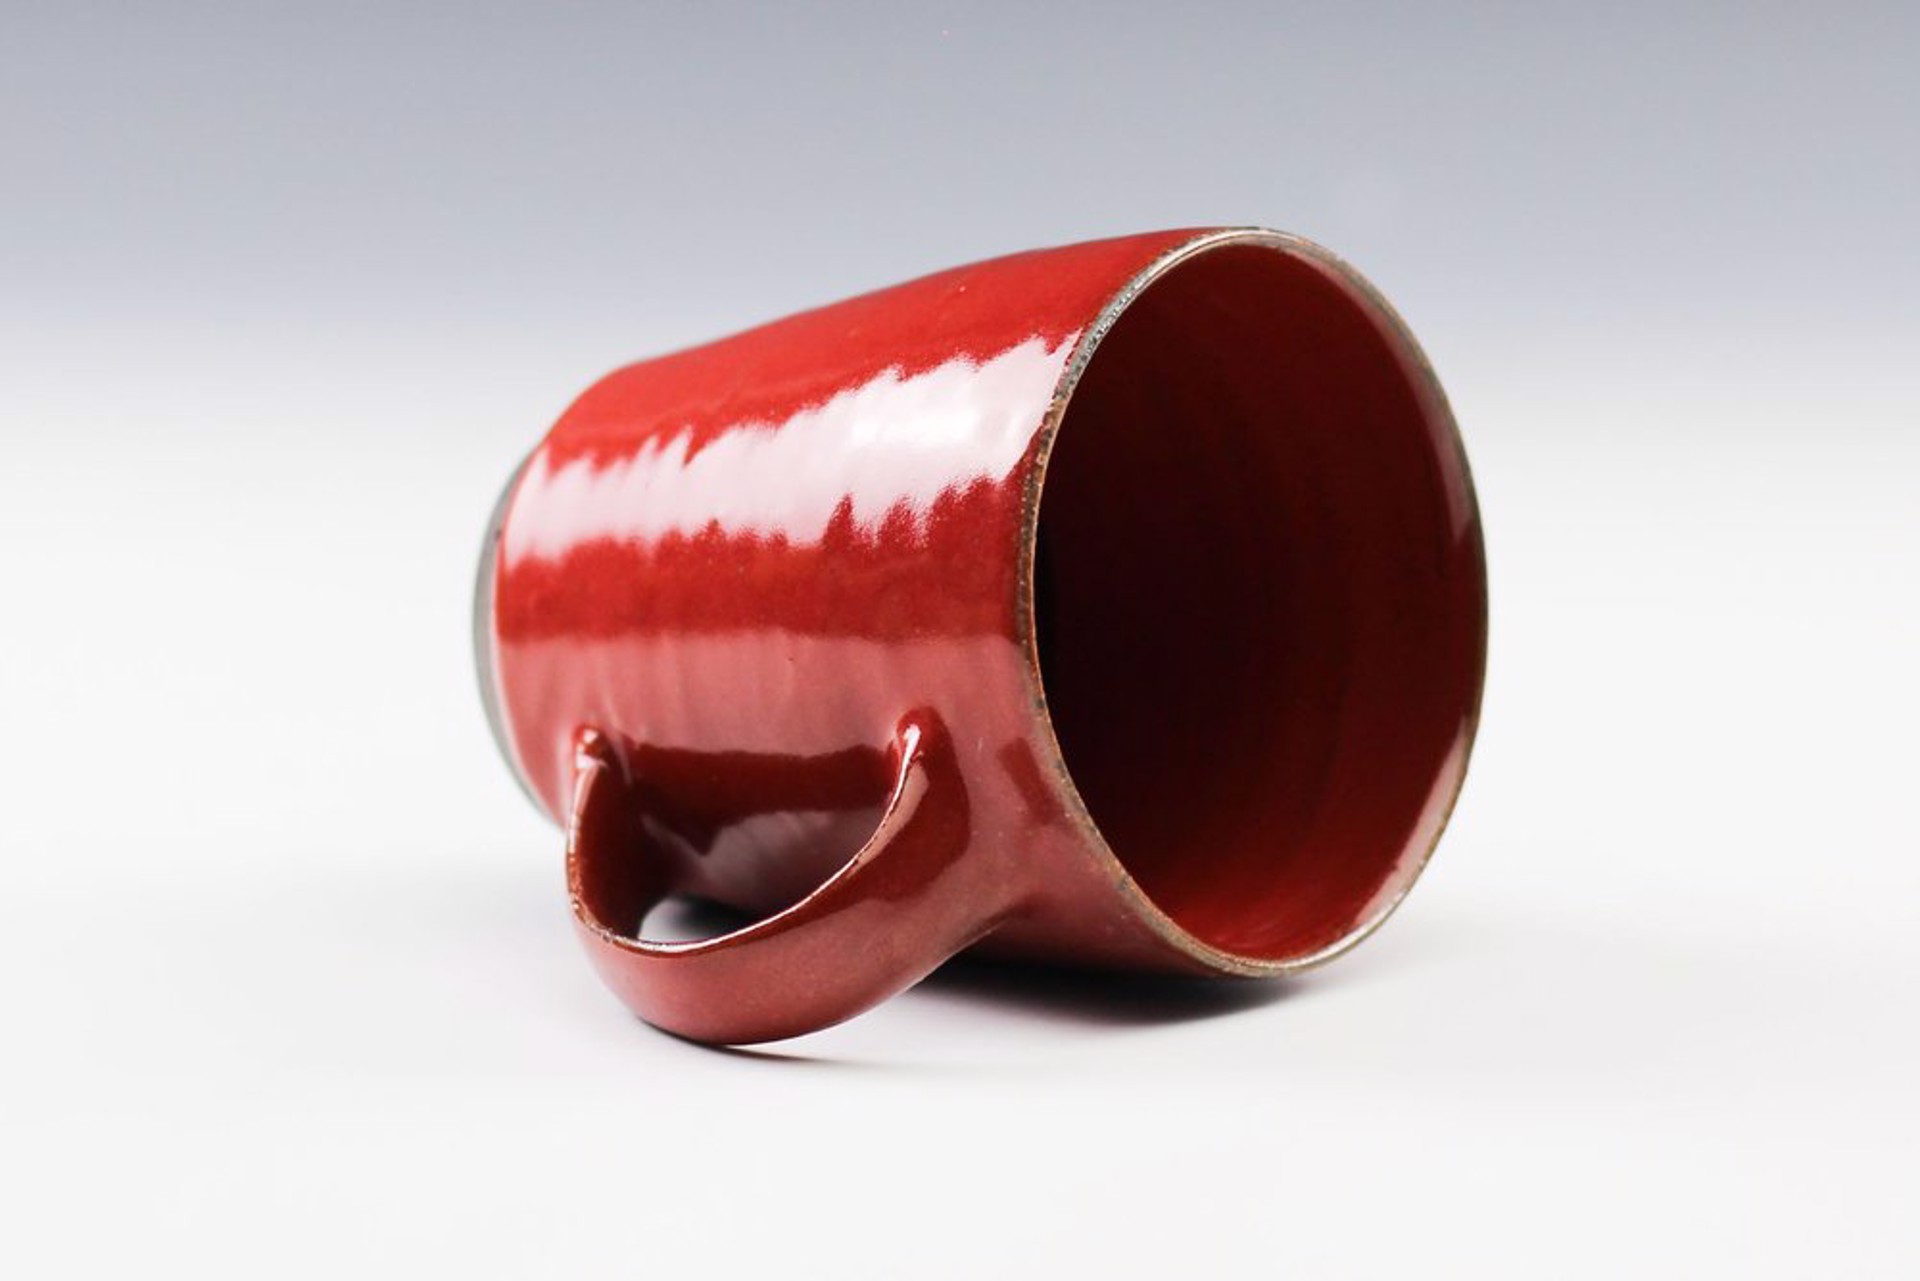 Mug by Shumpei Yamaki